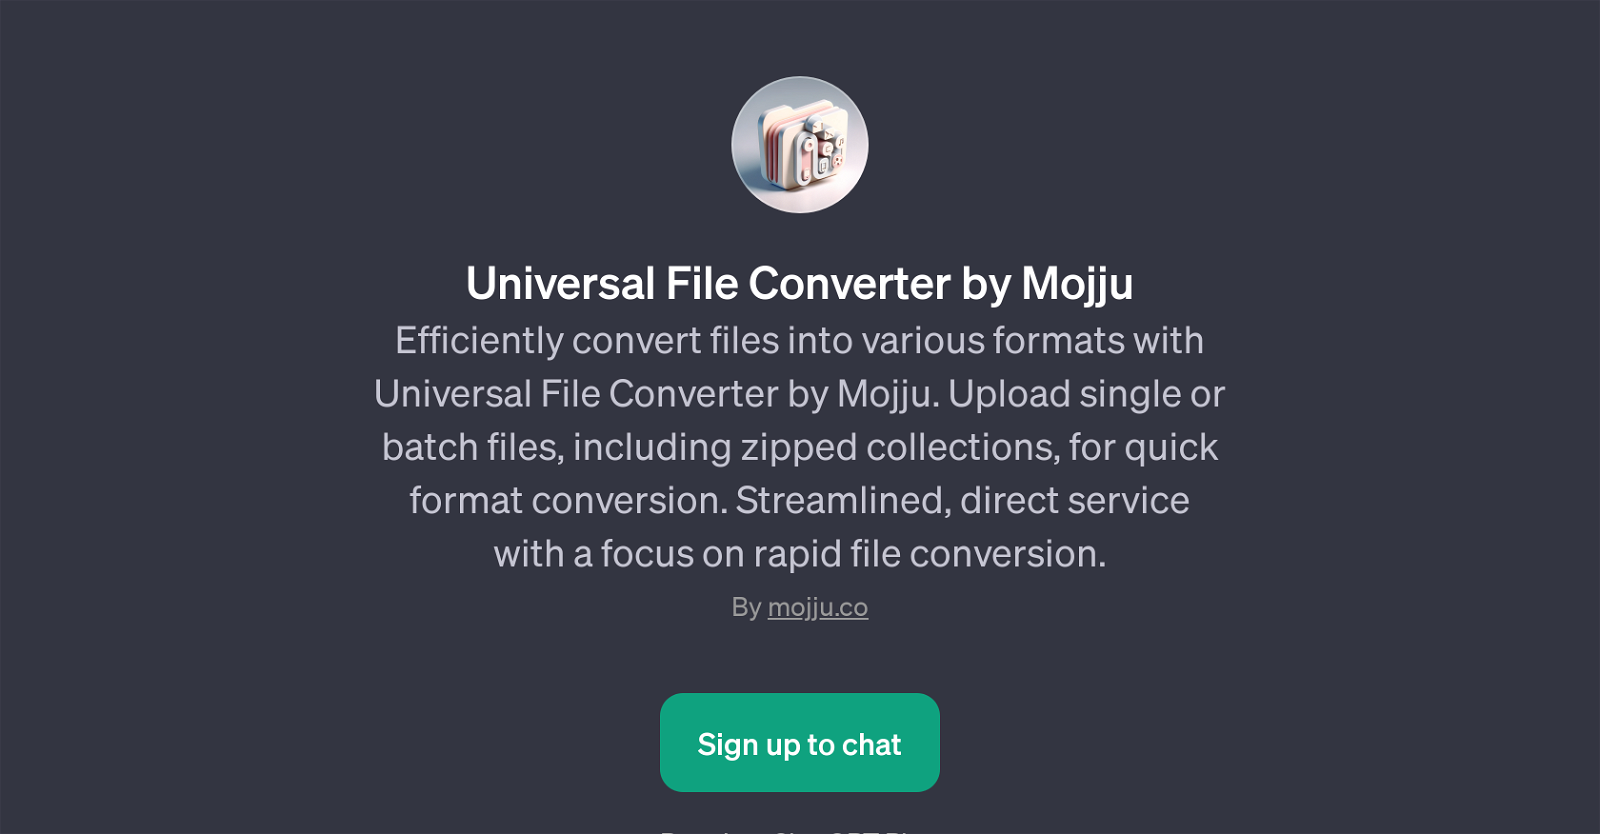 Universal File Converter by Mojju website